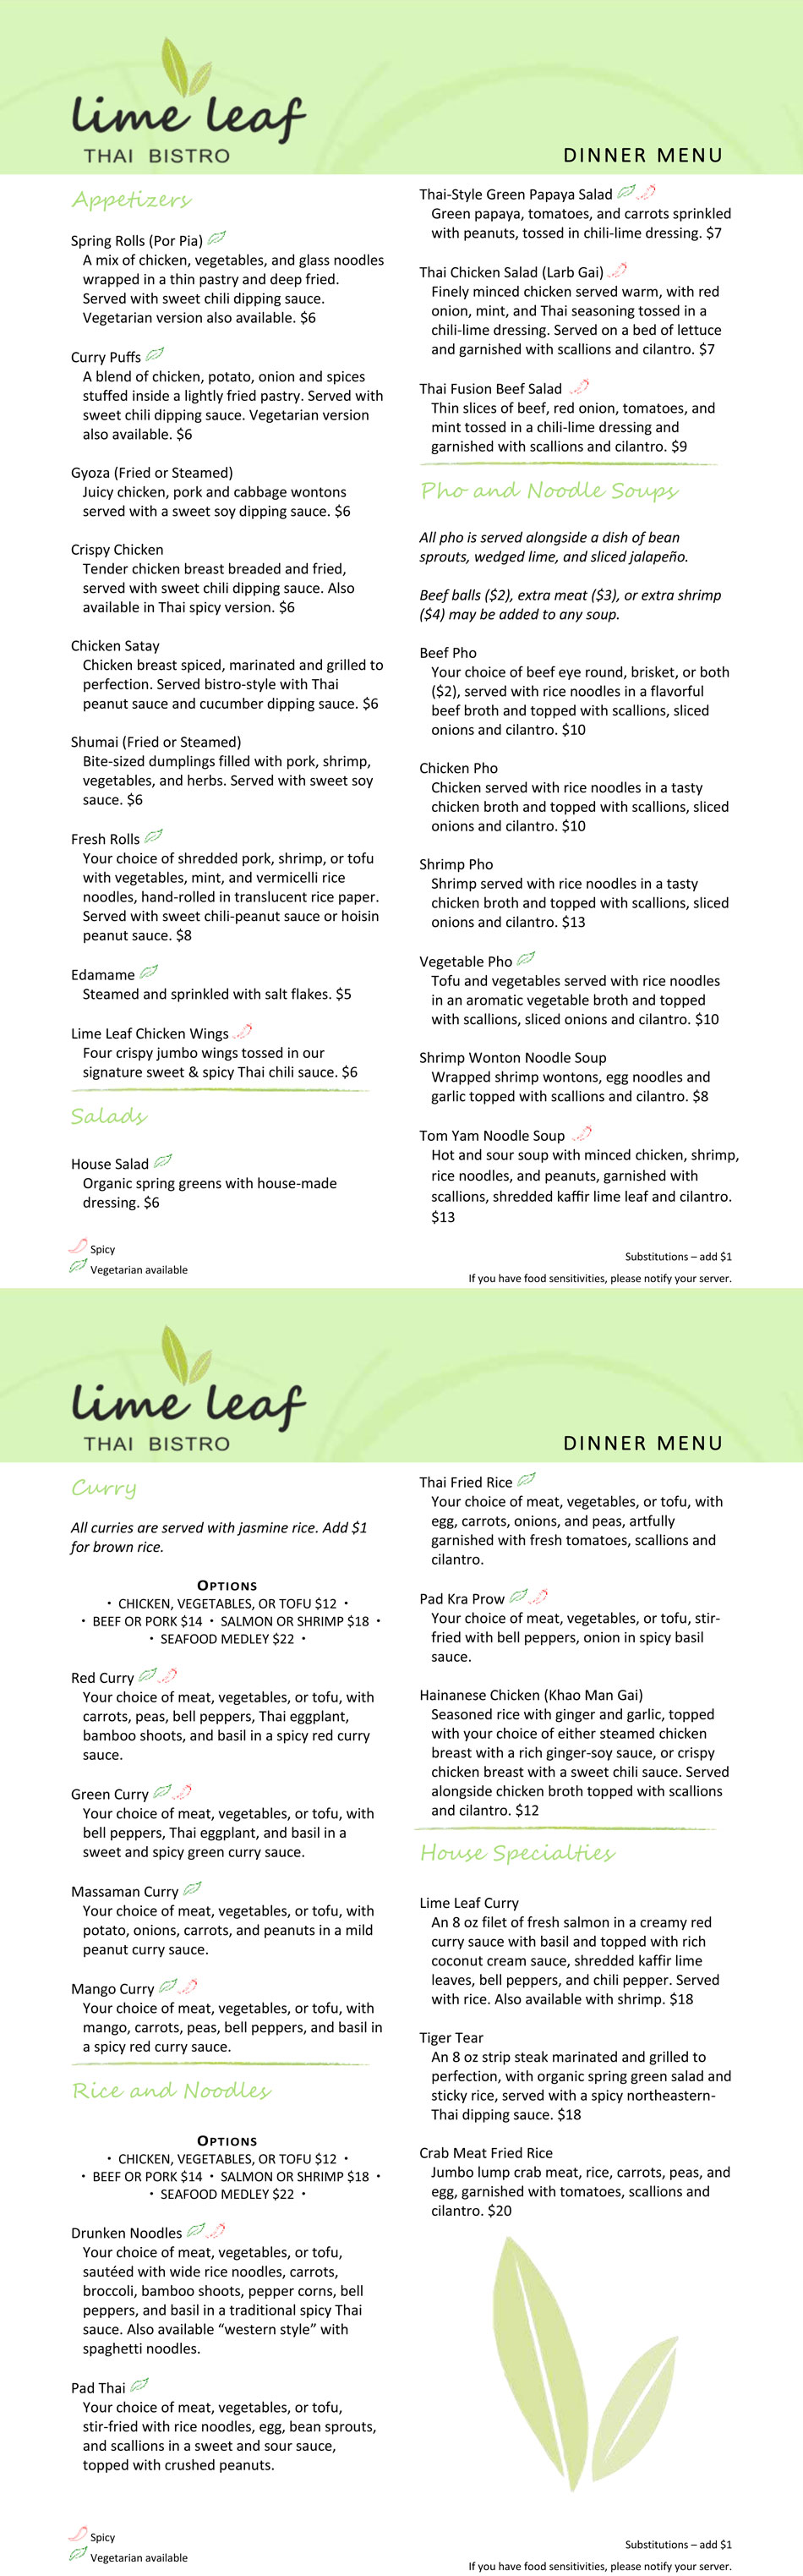 Lime Leaf Thai Bistro Dinner Menu